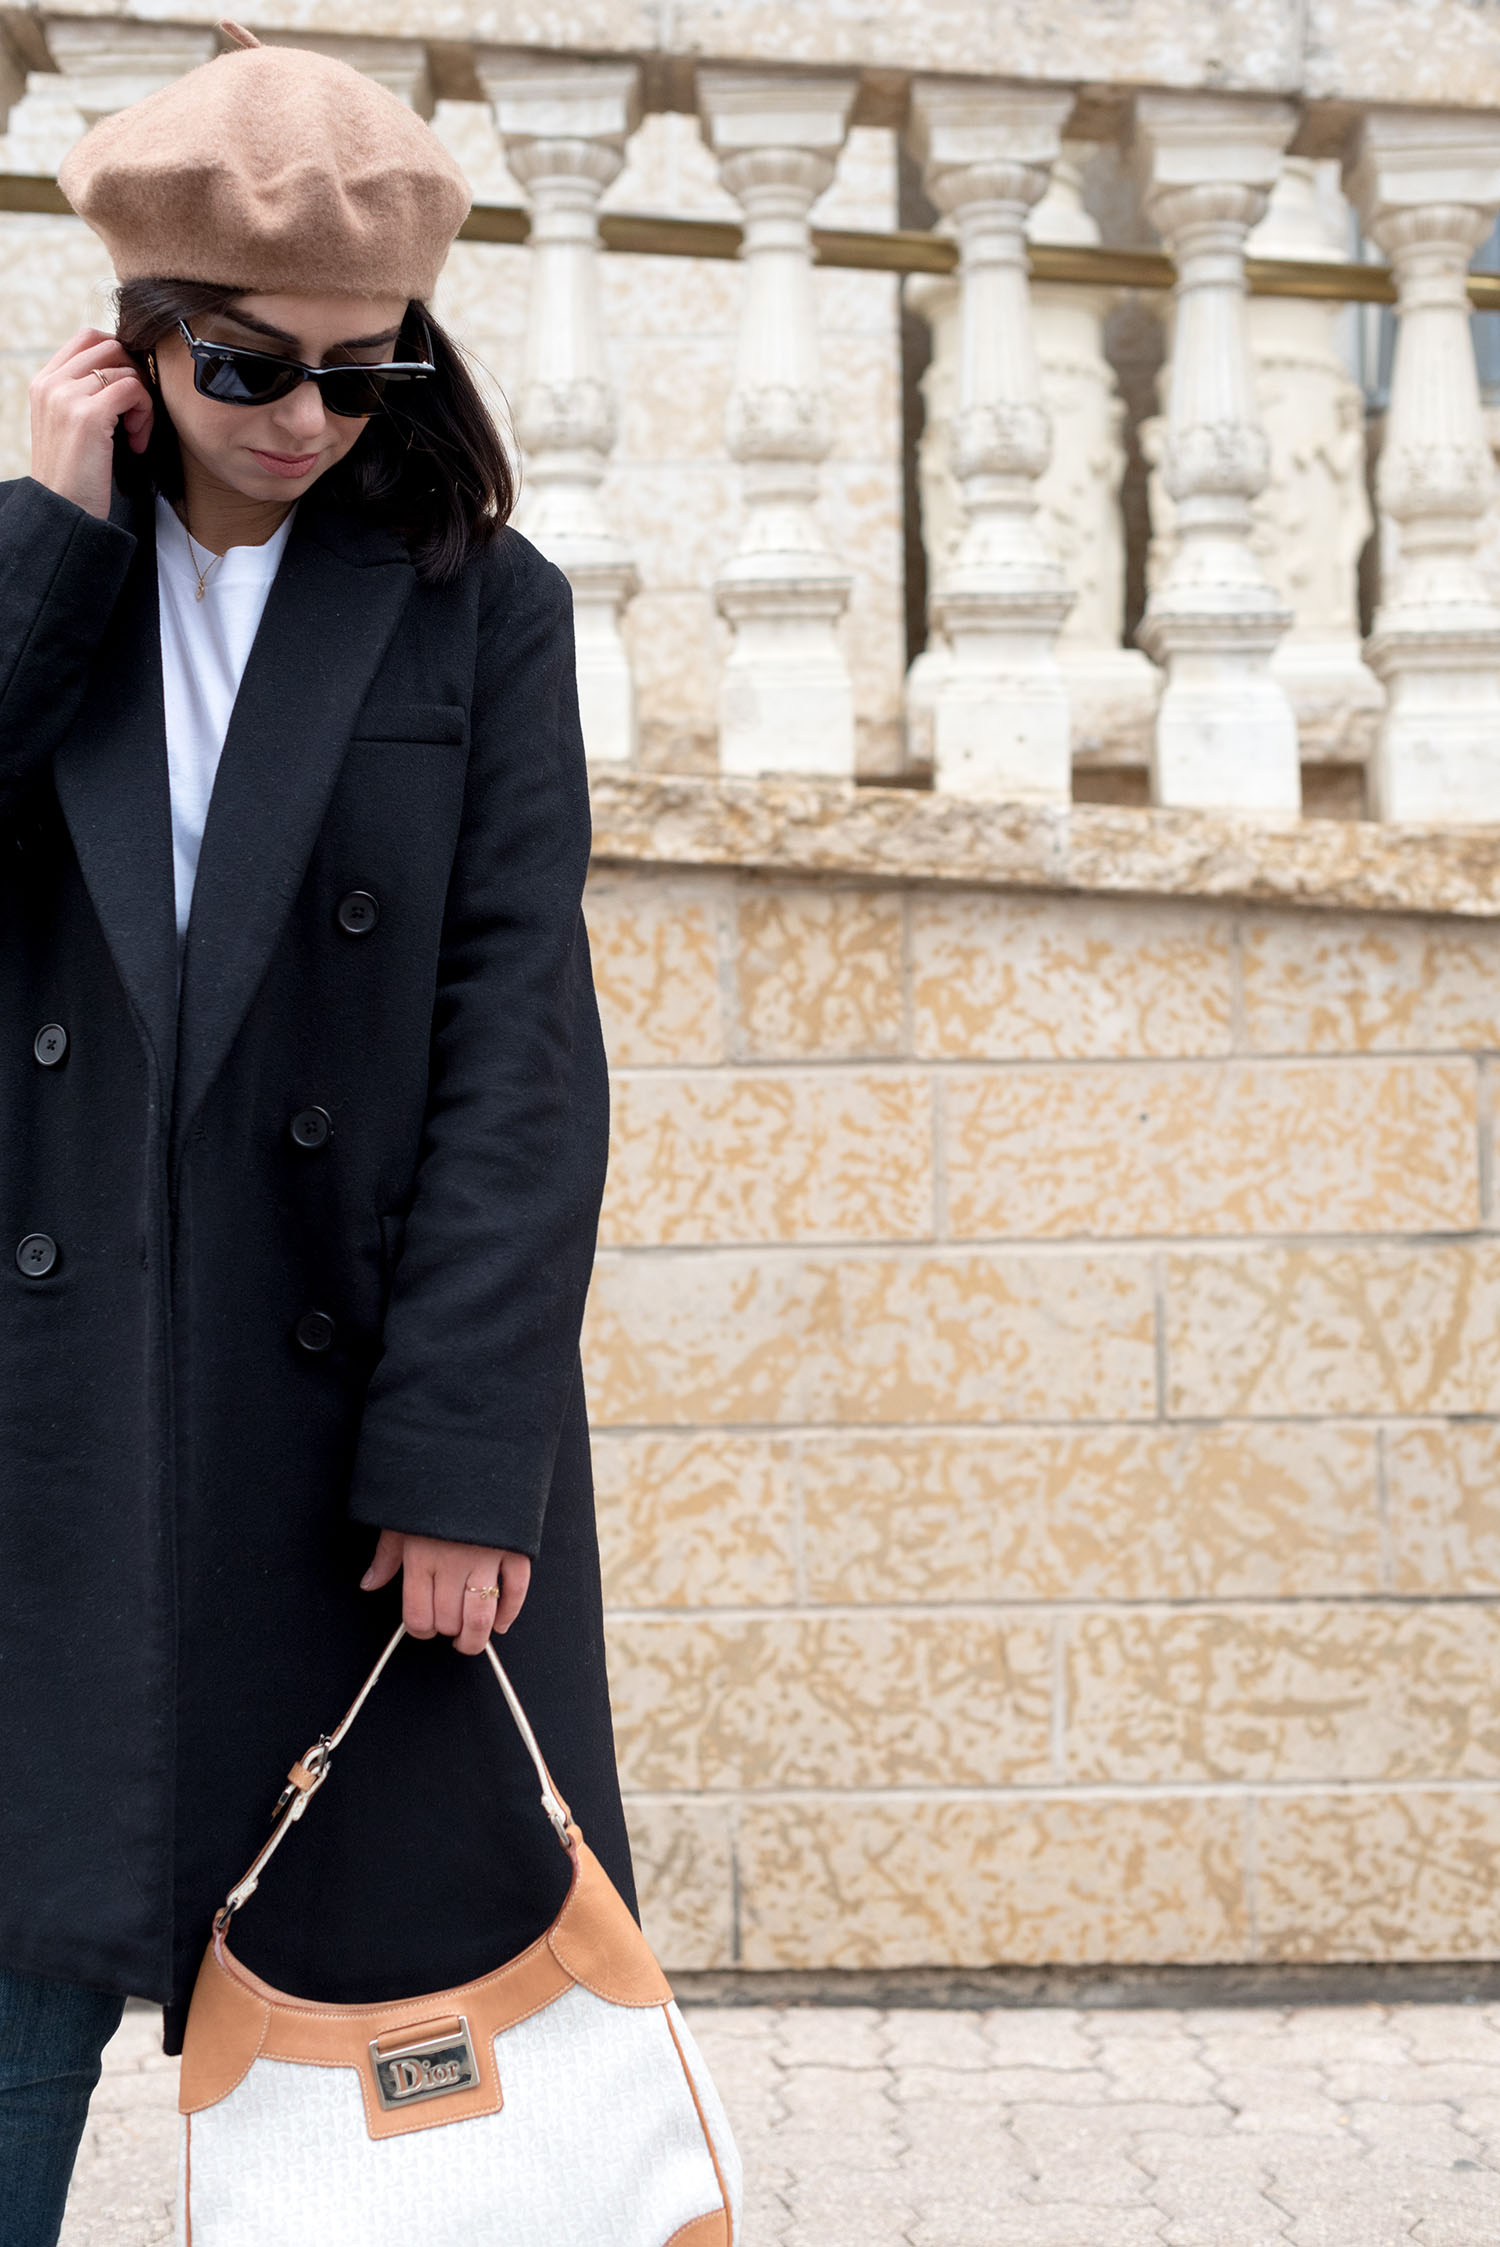 Portrait of top Canadian fashion blogger Cee Fardoe of Coco & Vera, wearing RayBan Wayfarer sunglasses and carrying a Dior bag